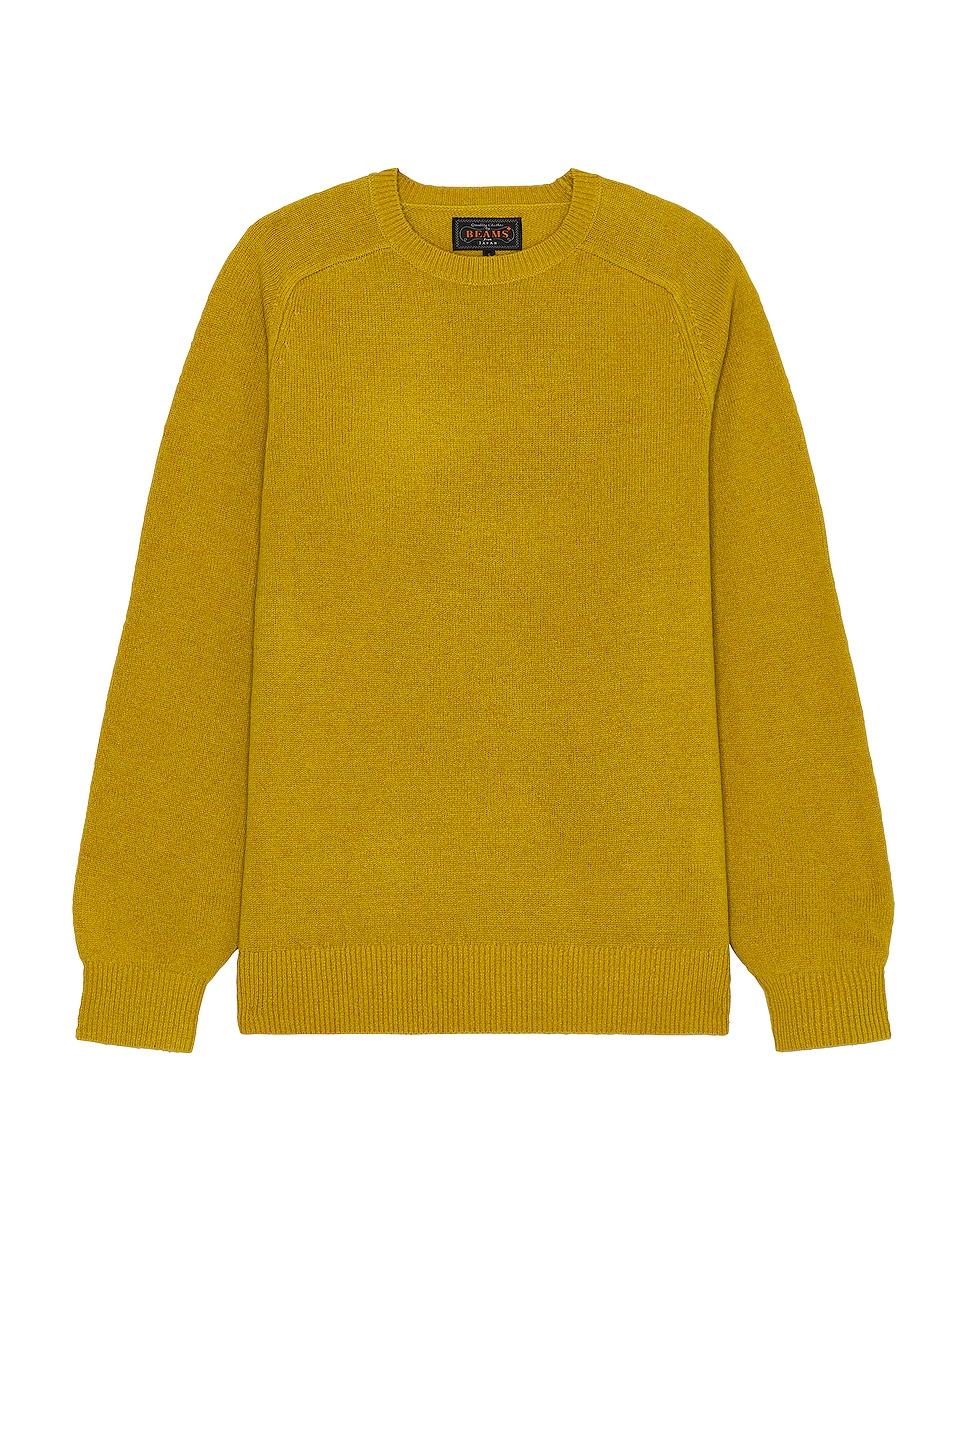 Beams Plus Sweater in Mustard | FWRD